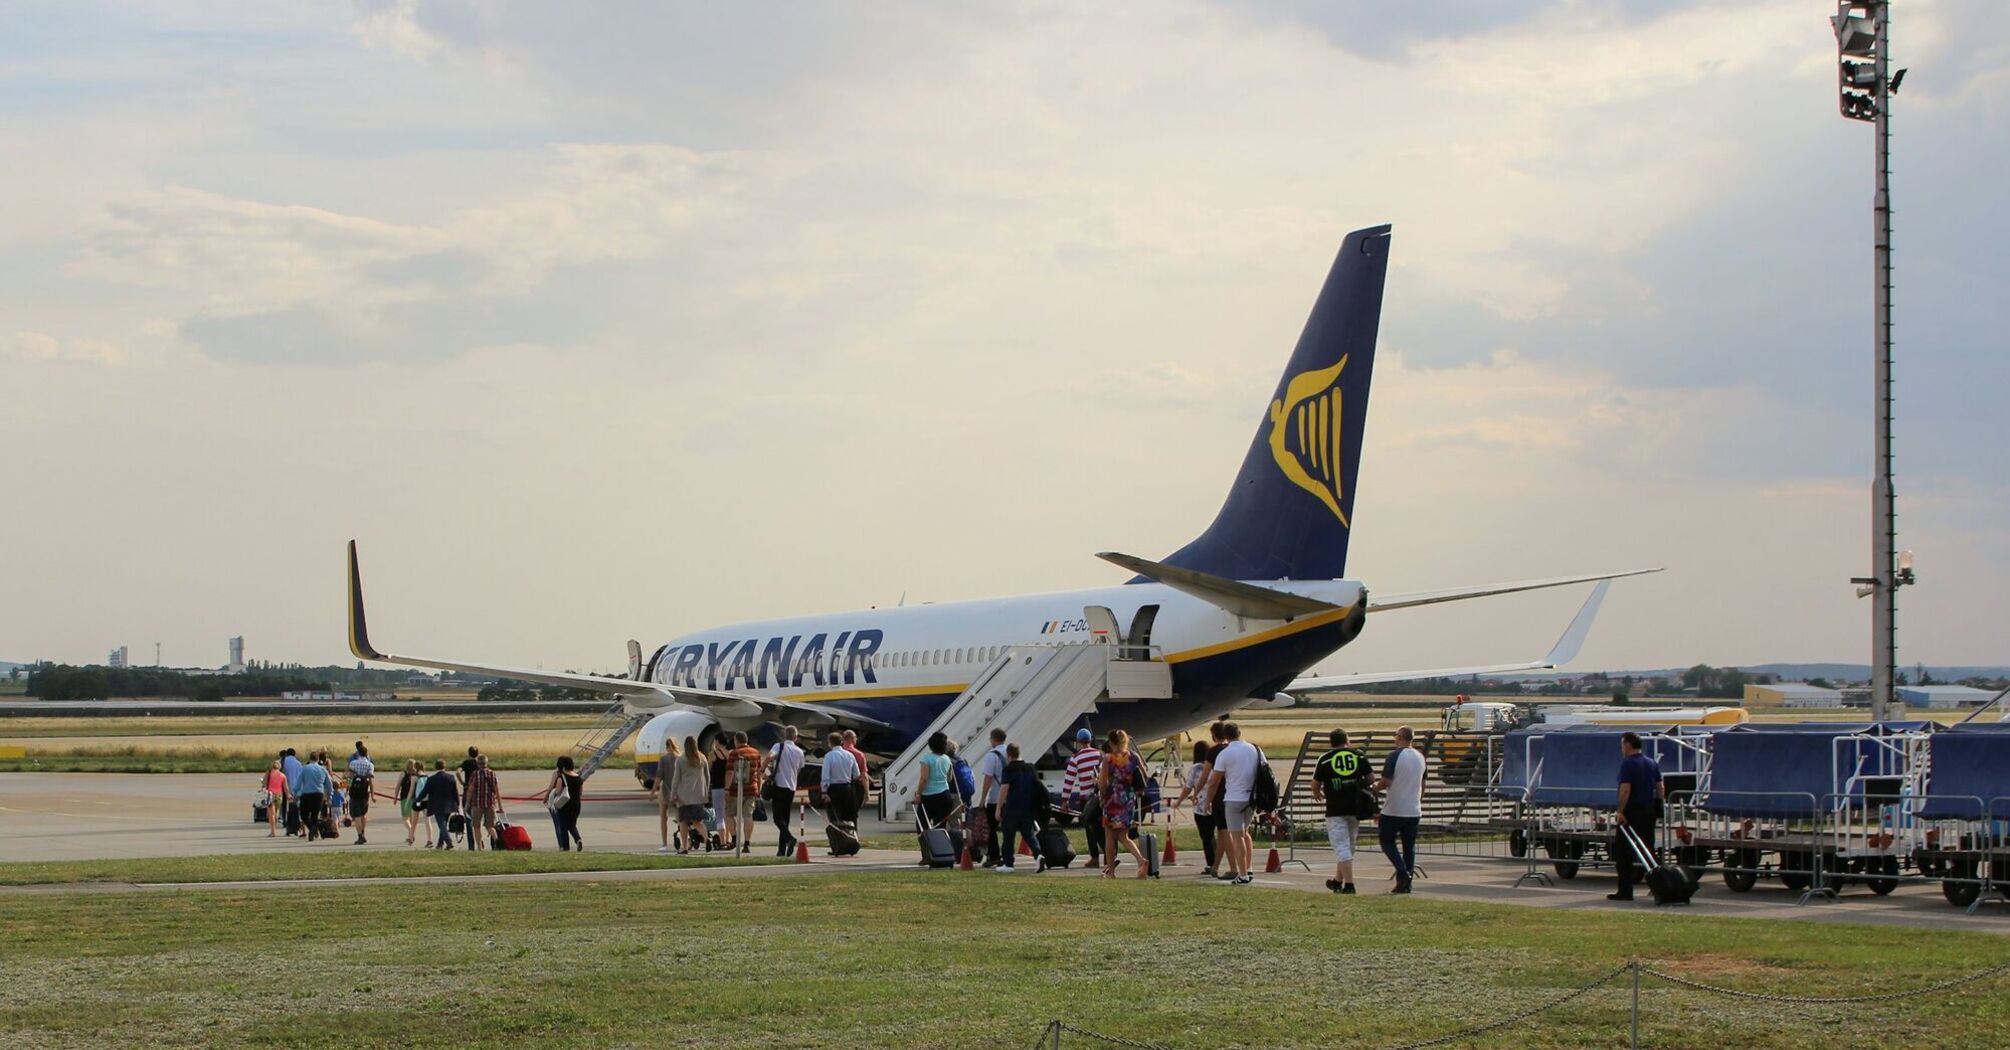 Passengers boarding a Ryanair aircraft on the tarmac